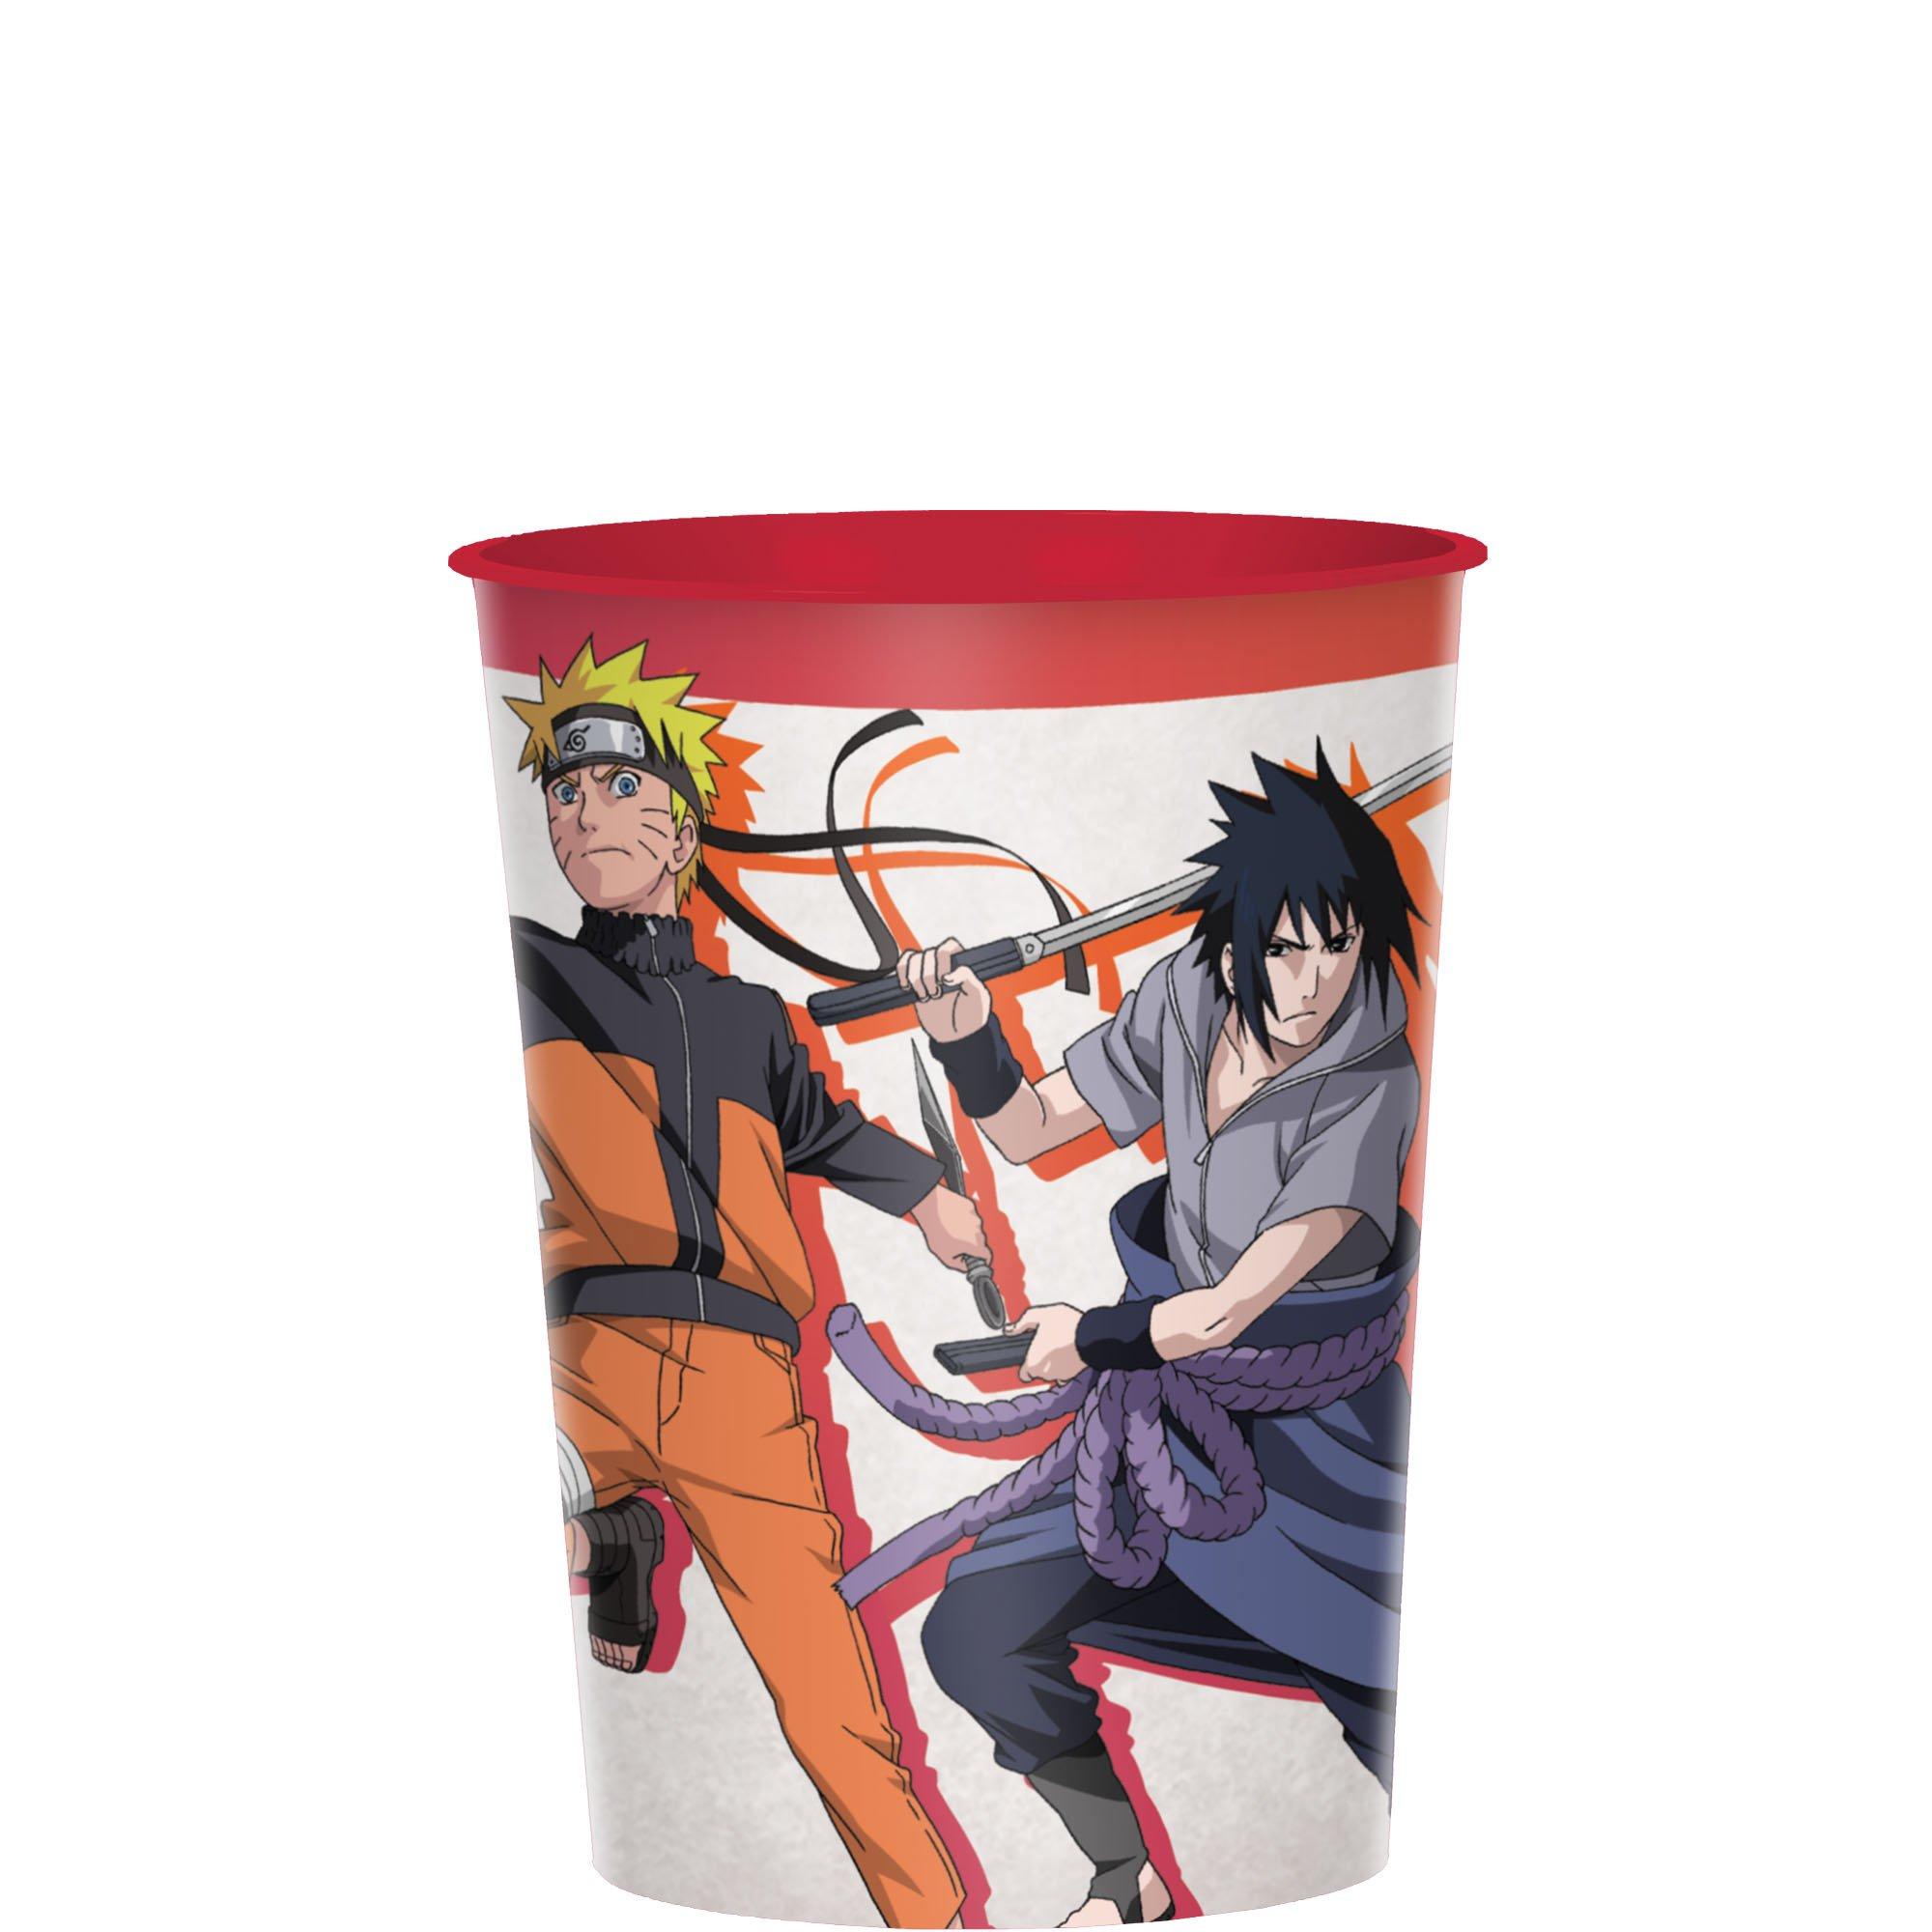 Naruto Shippuden Team 7 Plastic Favor Cup, 16oz